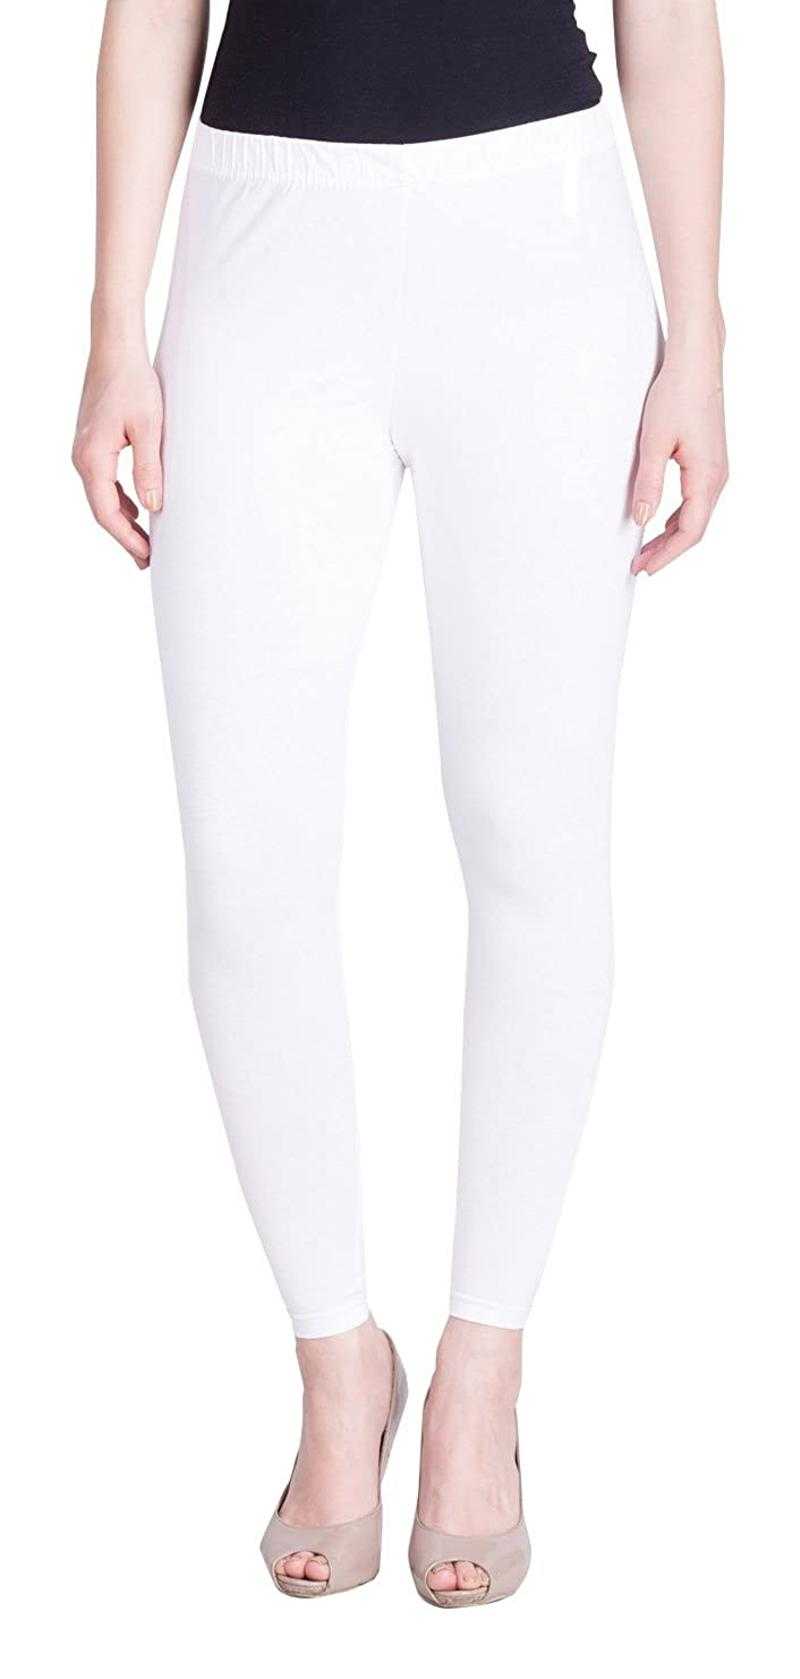 Comfort lady 3XL Plain Cotton Kurti Pants for Women